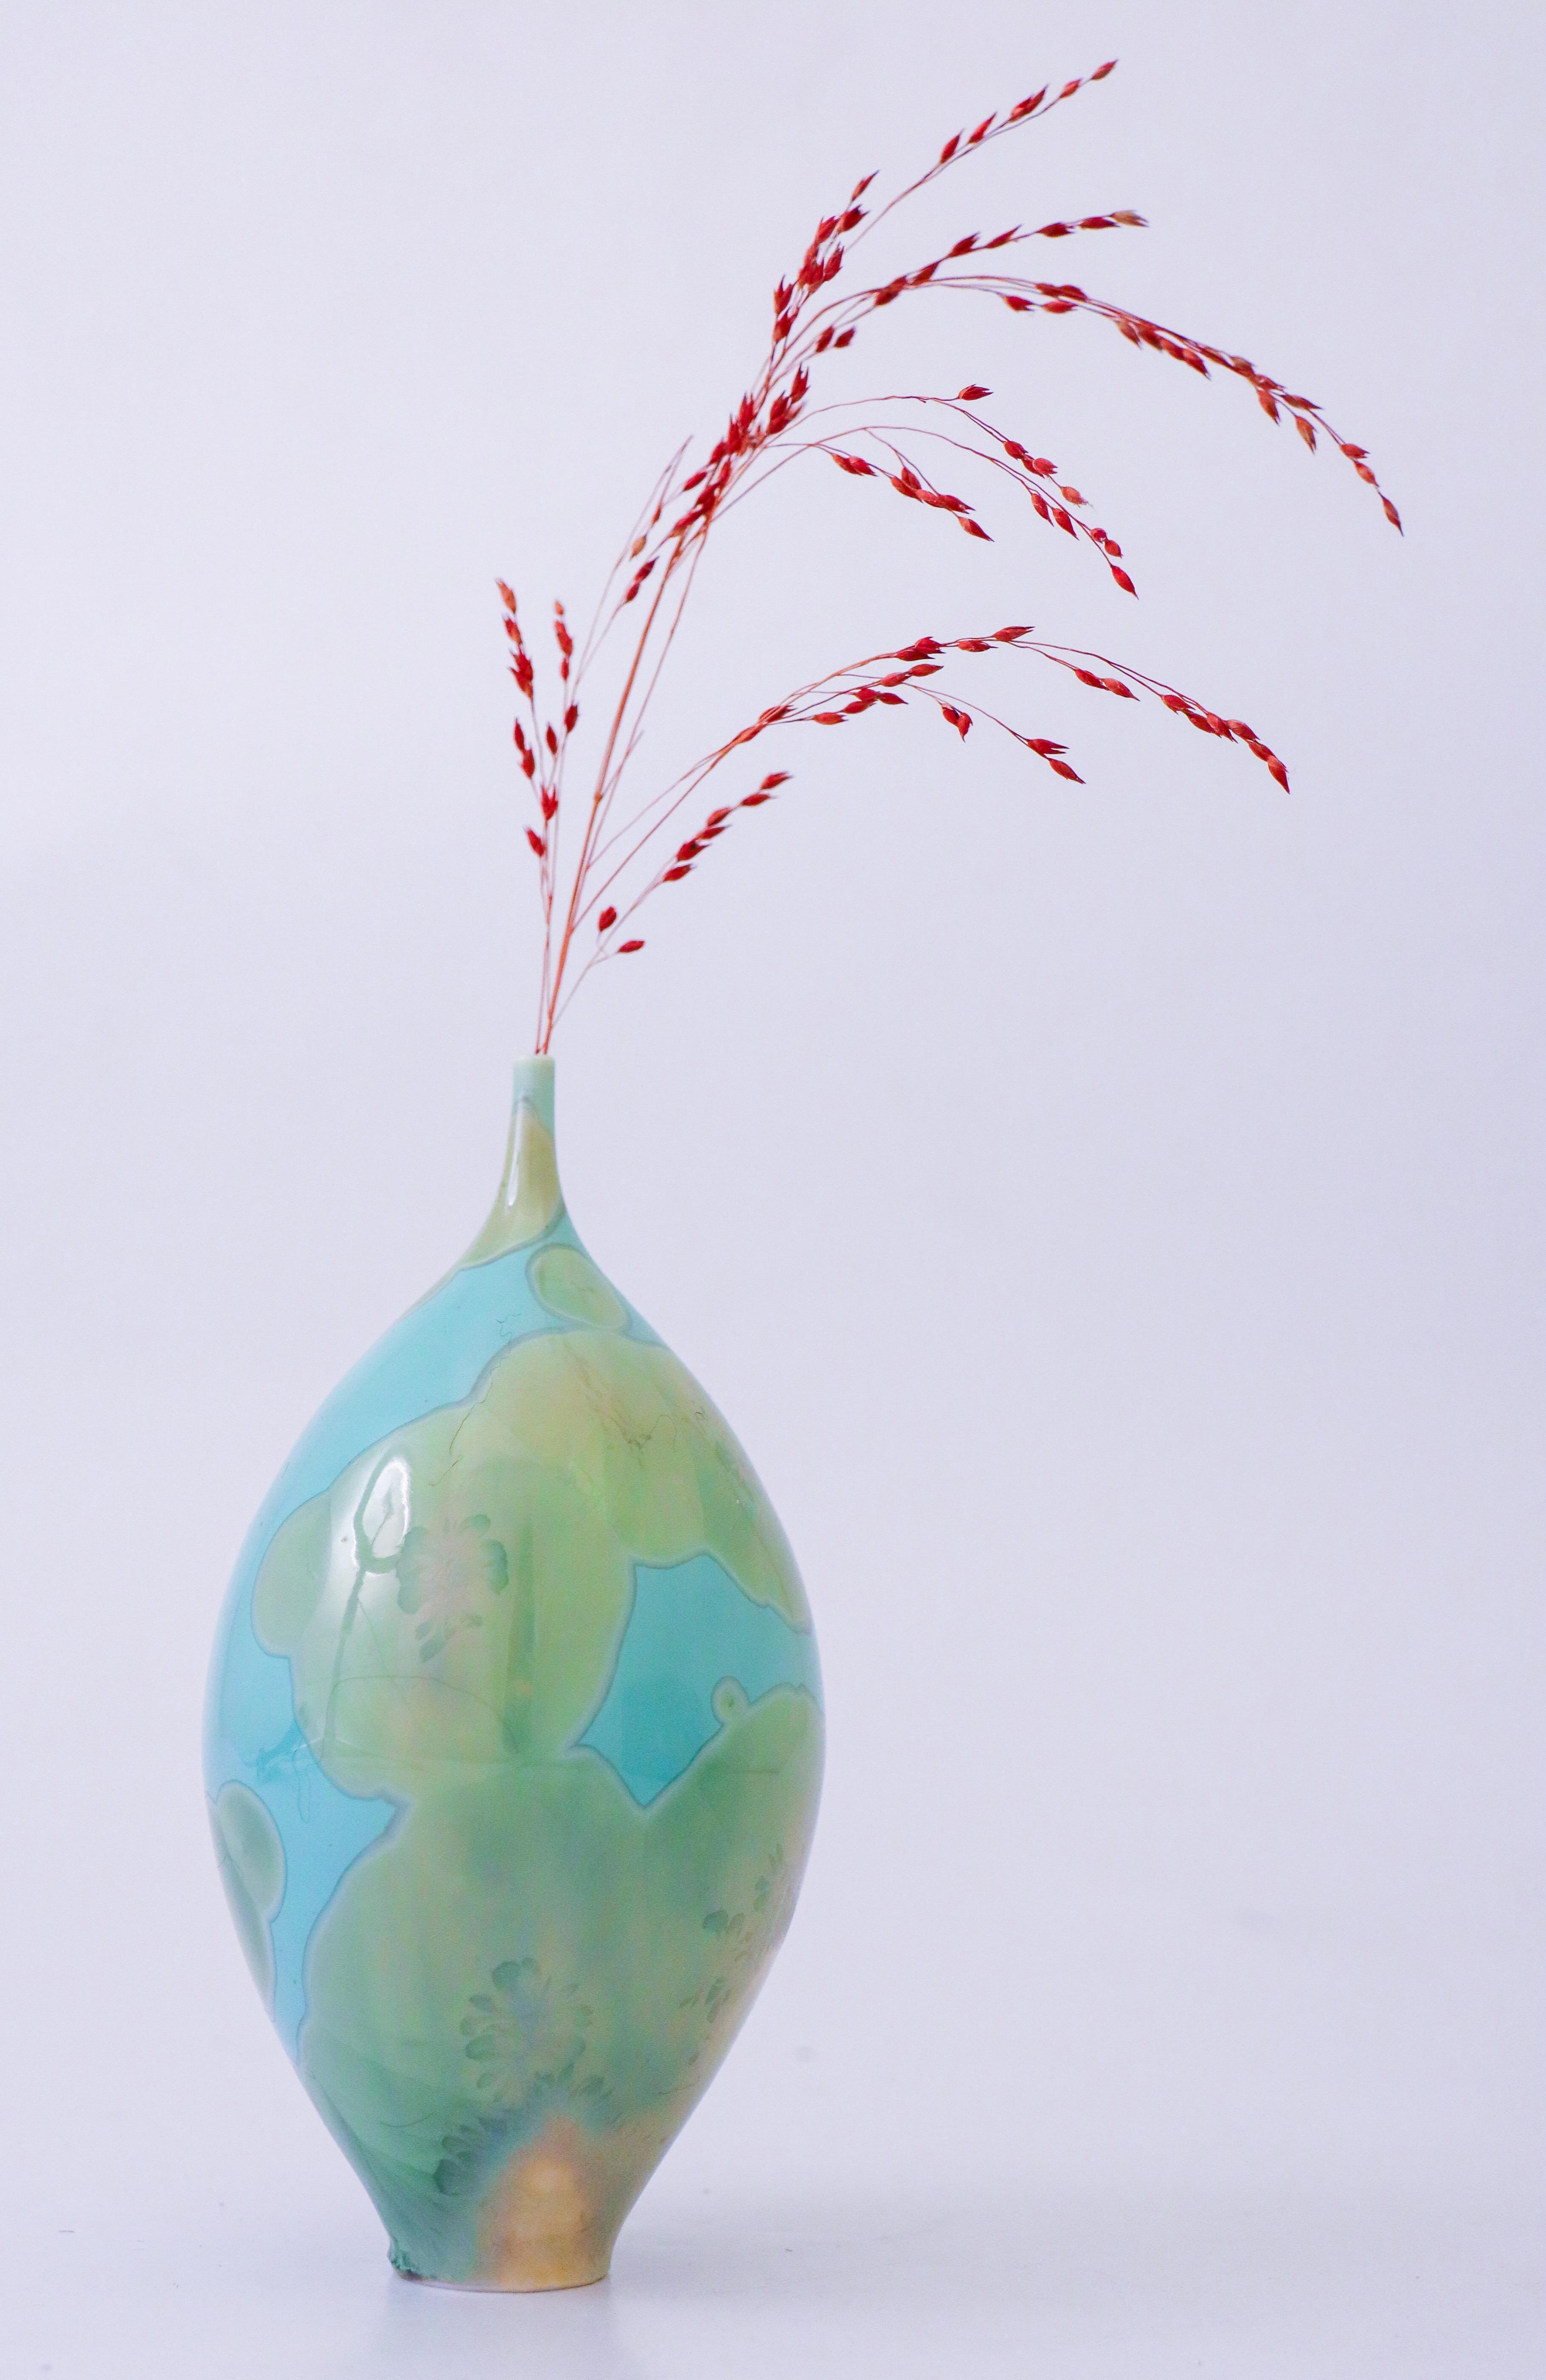 Glazed Isak Isaksson Turquoise Ceramic Vase Crystalline Glaze - Contemporary Artist For Sale